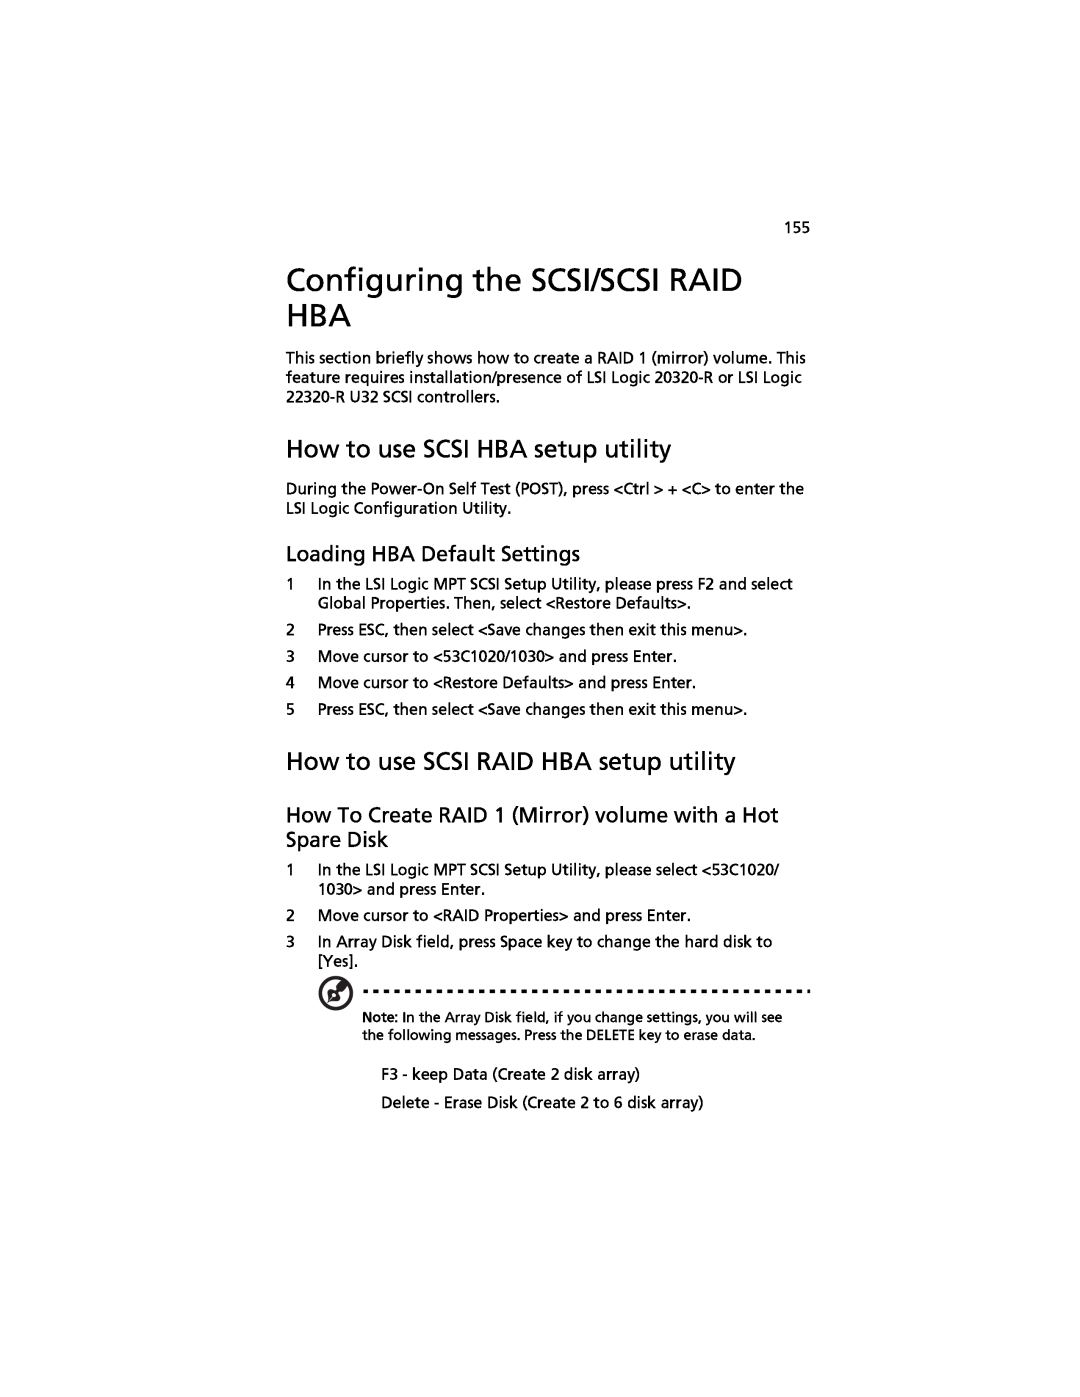 Acer G520 series manual Configuring the SCSI/SCSI RAID HBA, How to use SCSI HBA setup utility, Loading HBA Default Settings 